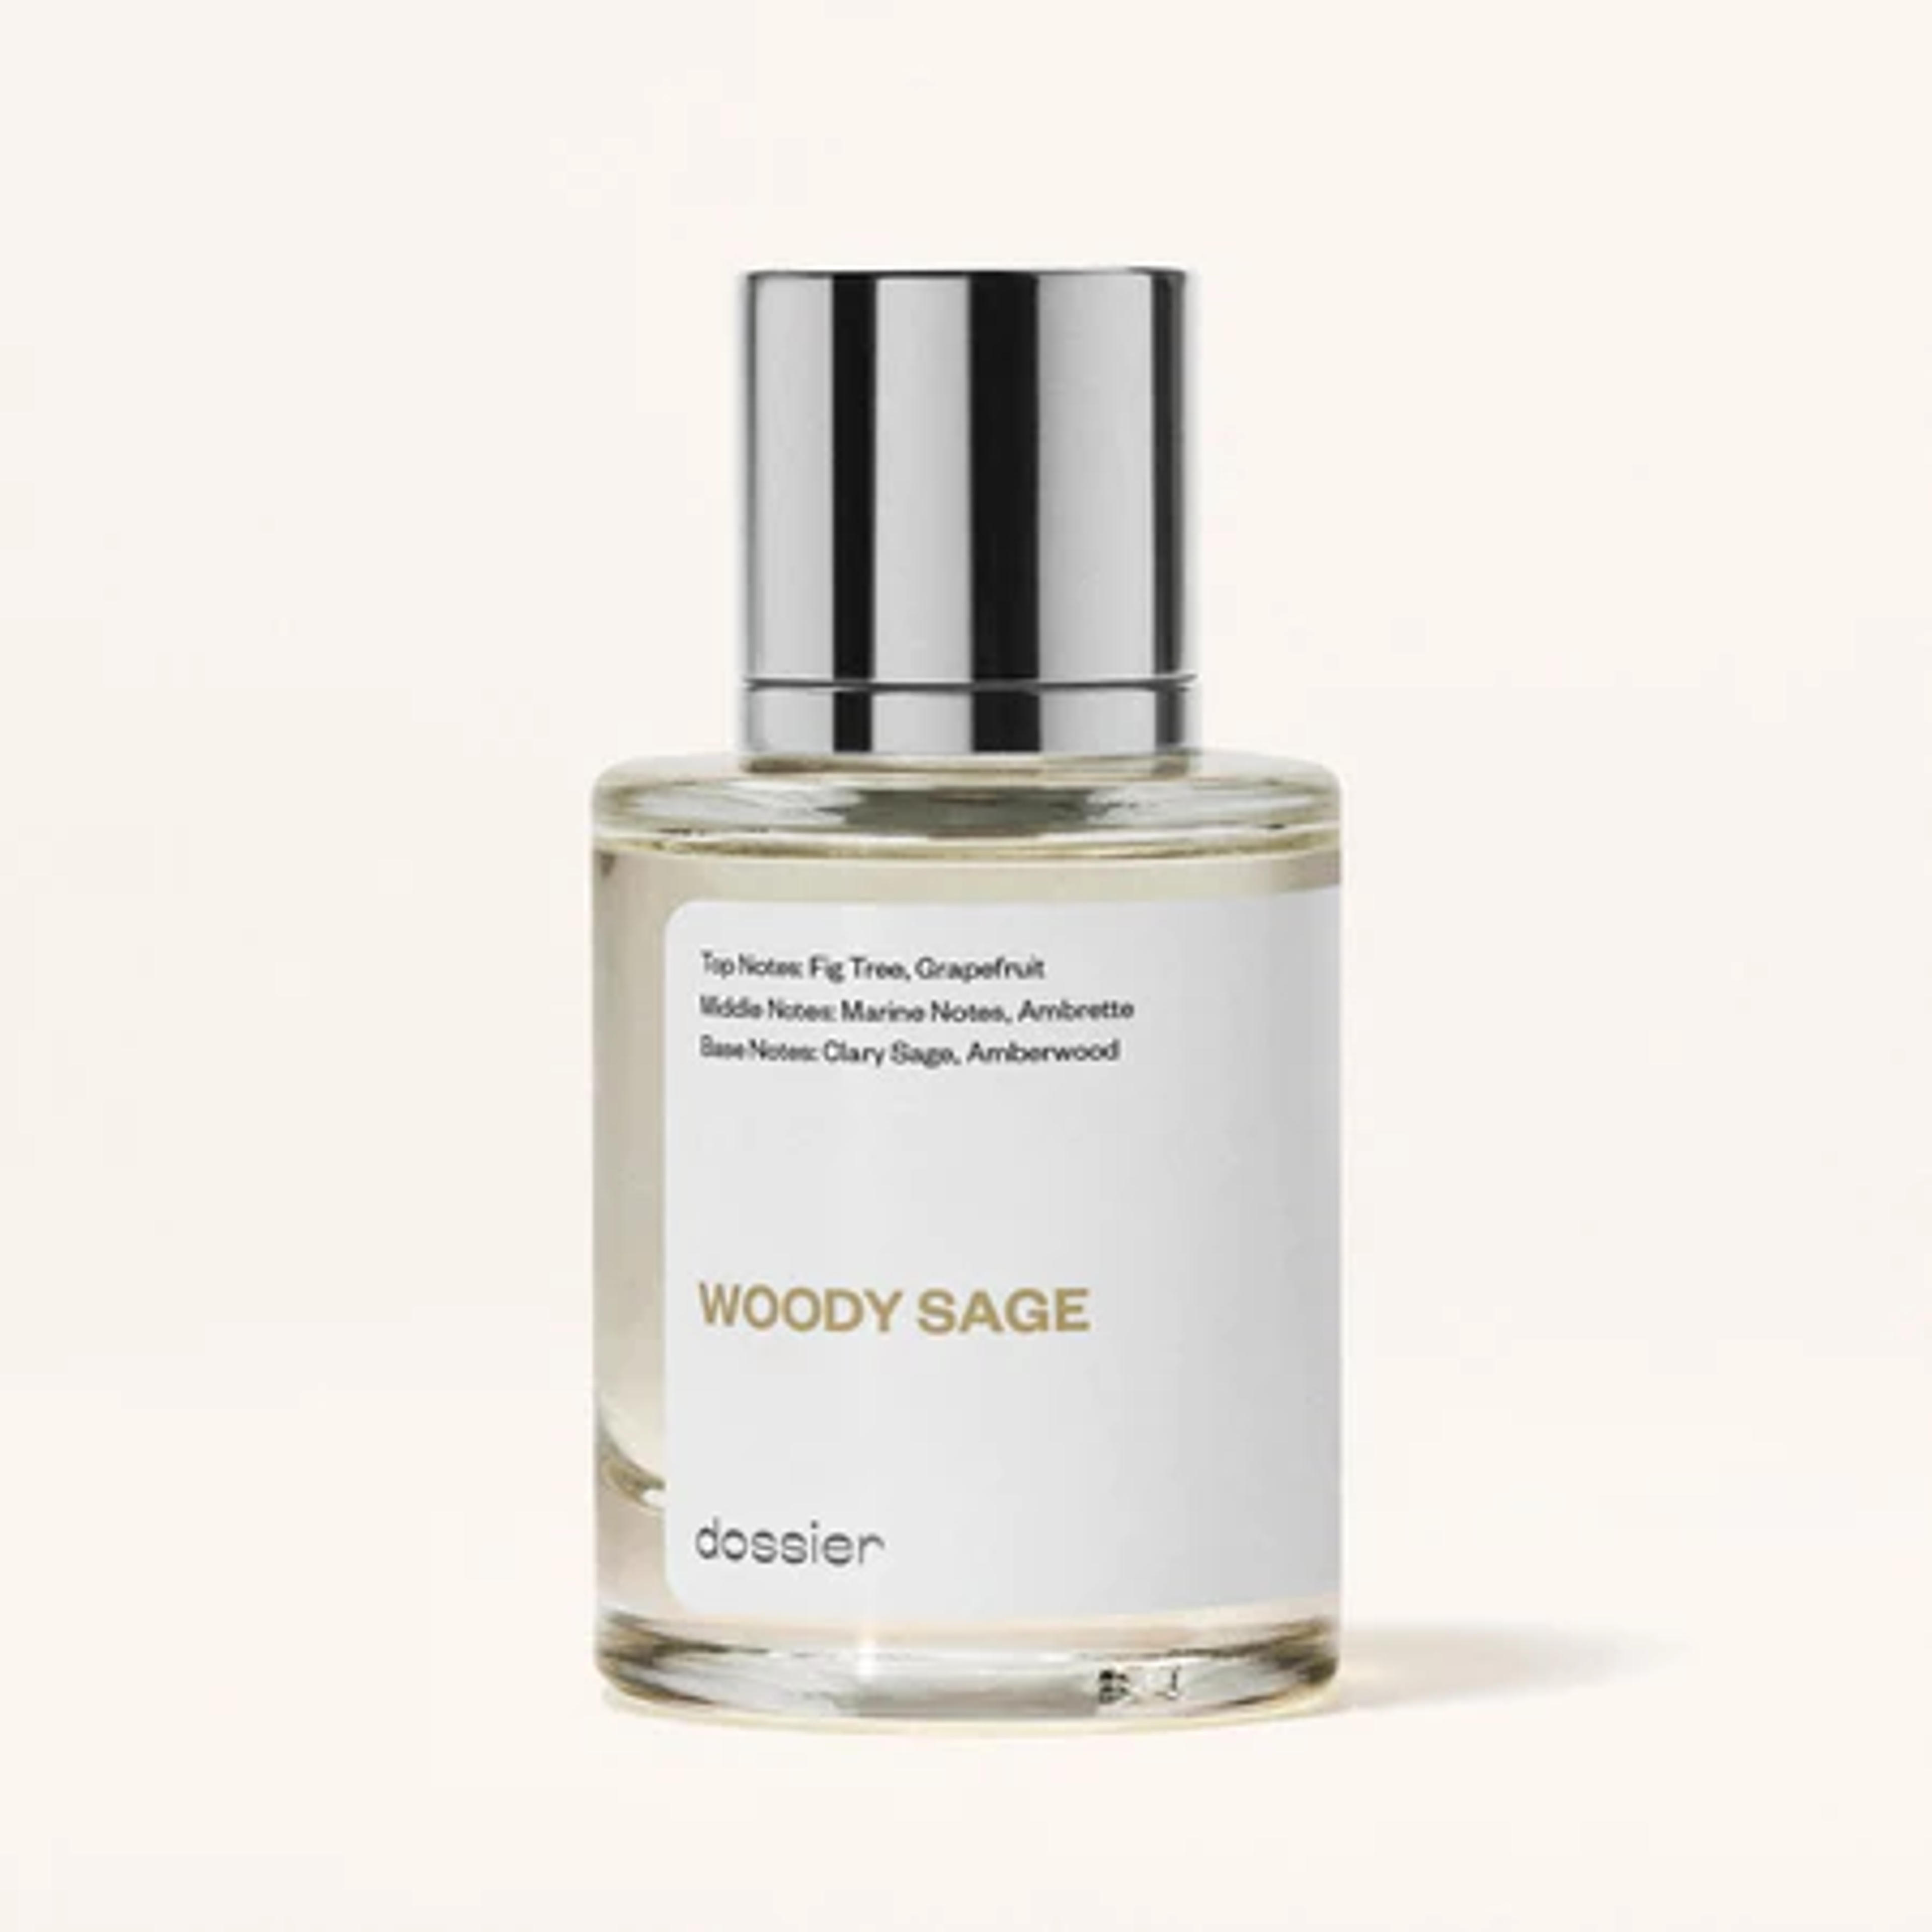 Jo Malone Wood Sage & Sea Salt Dupe Perfume: Woody Sage - Dossier Perfumes